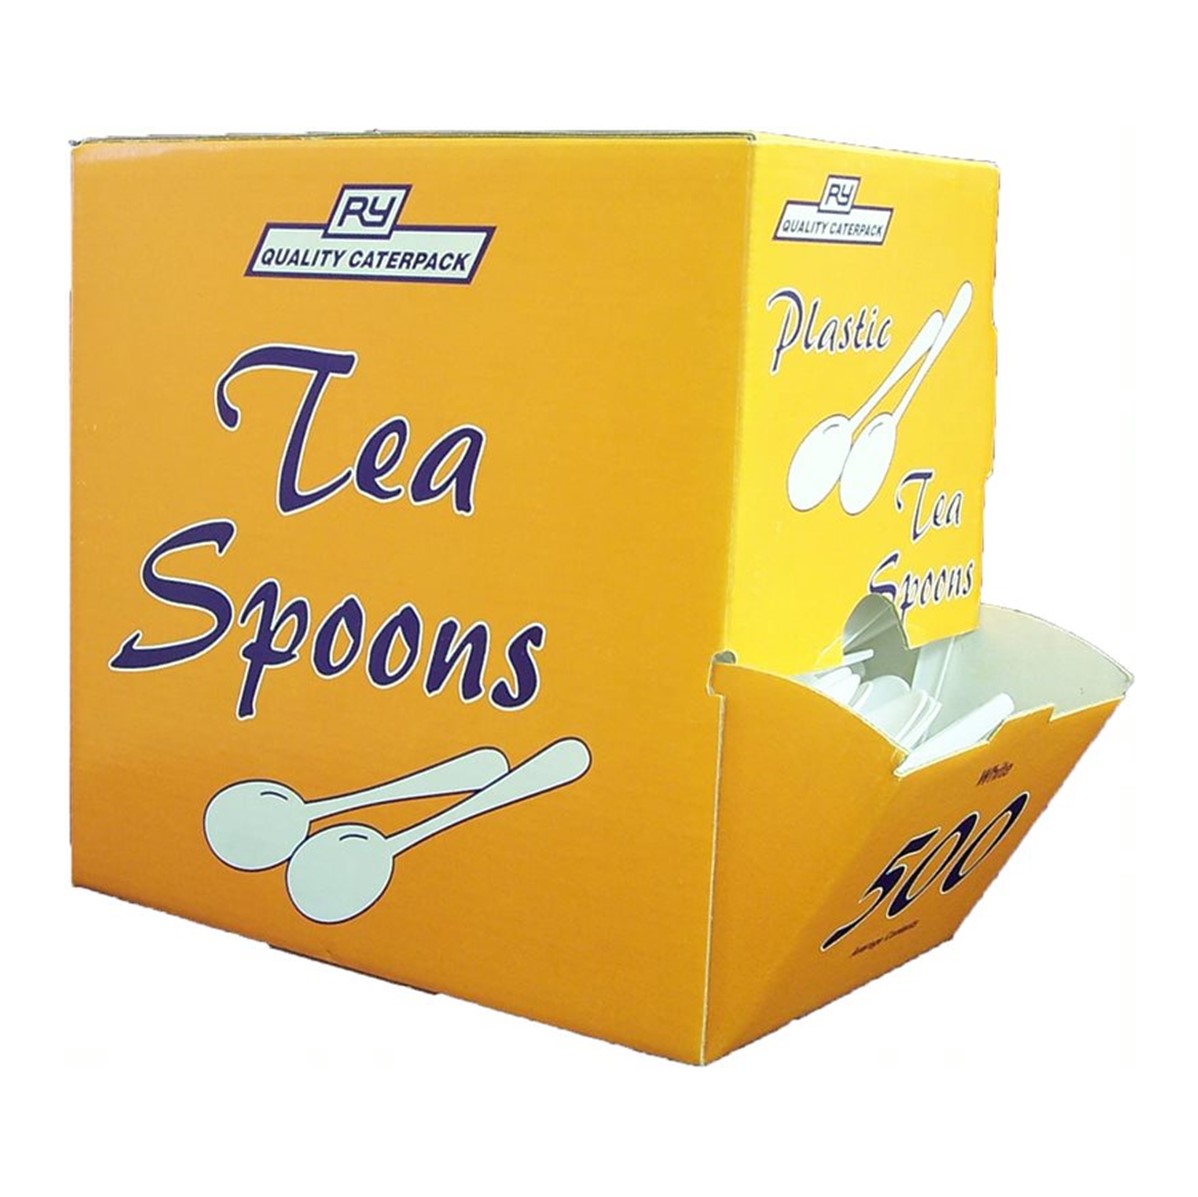 RY Caterpack Plastic Tea Spoons - 500 tea spoons in dispenser